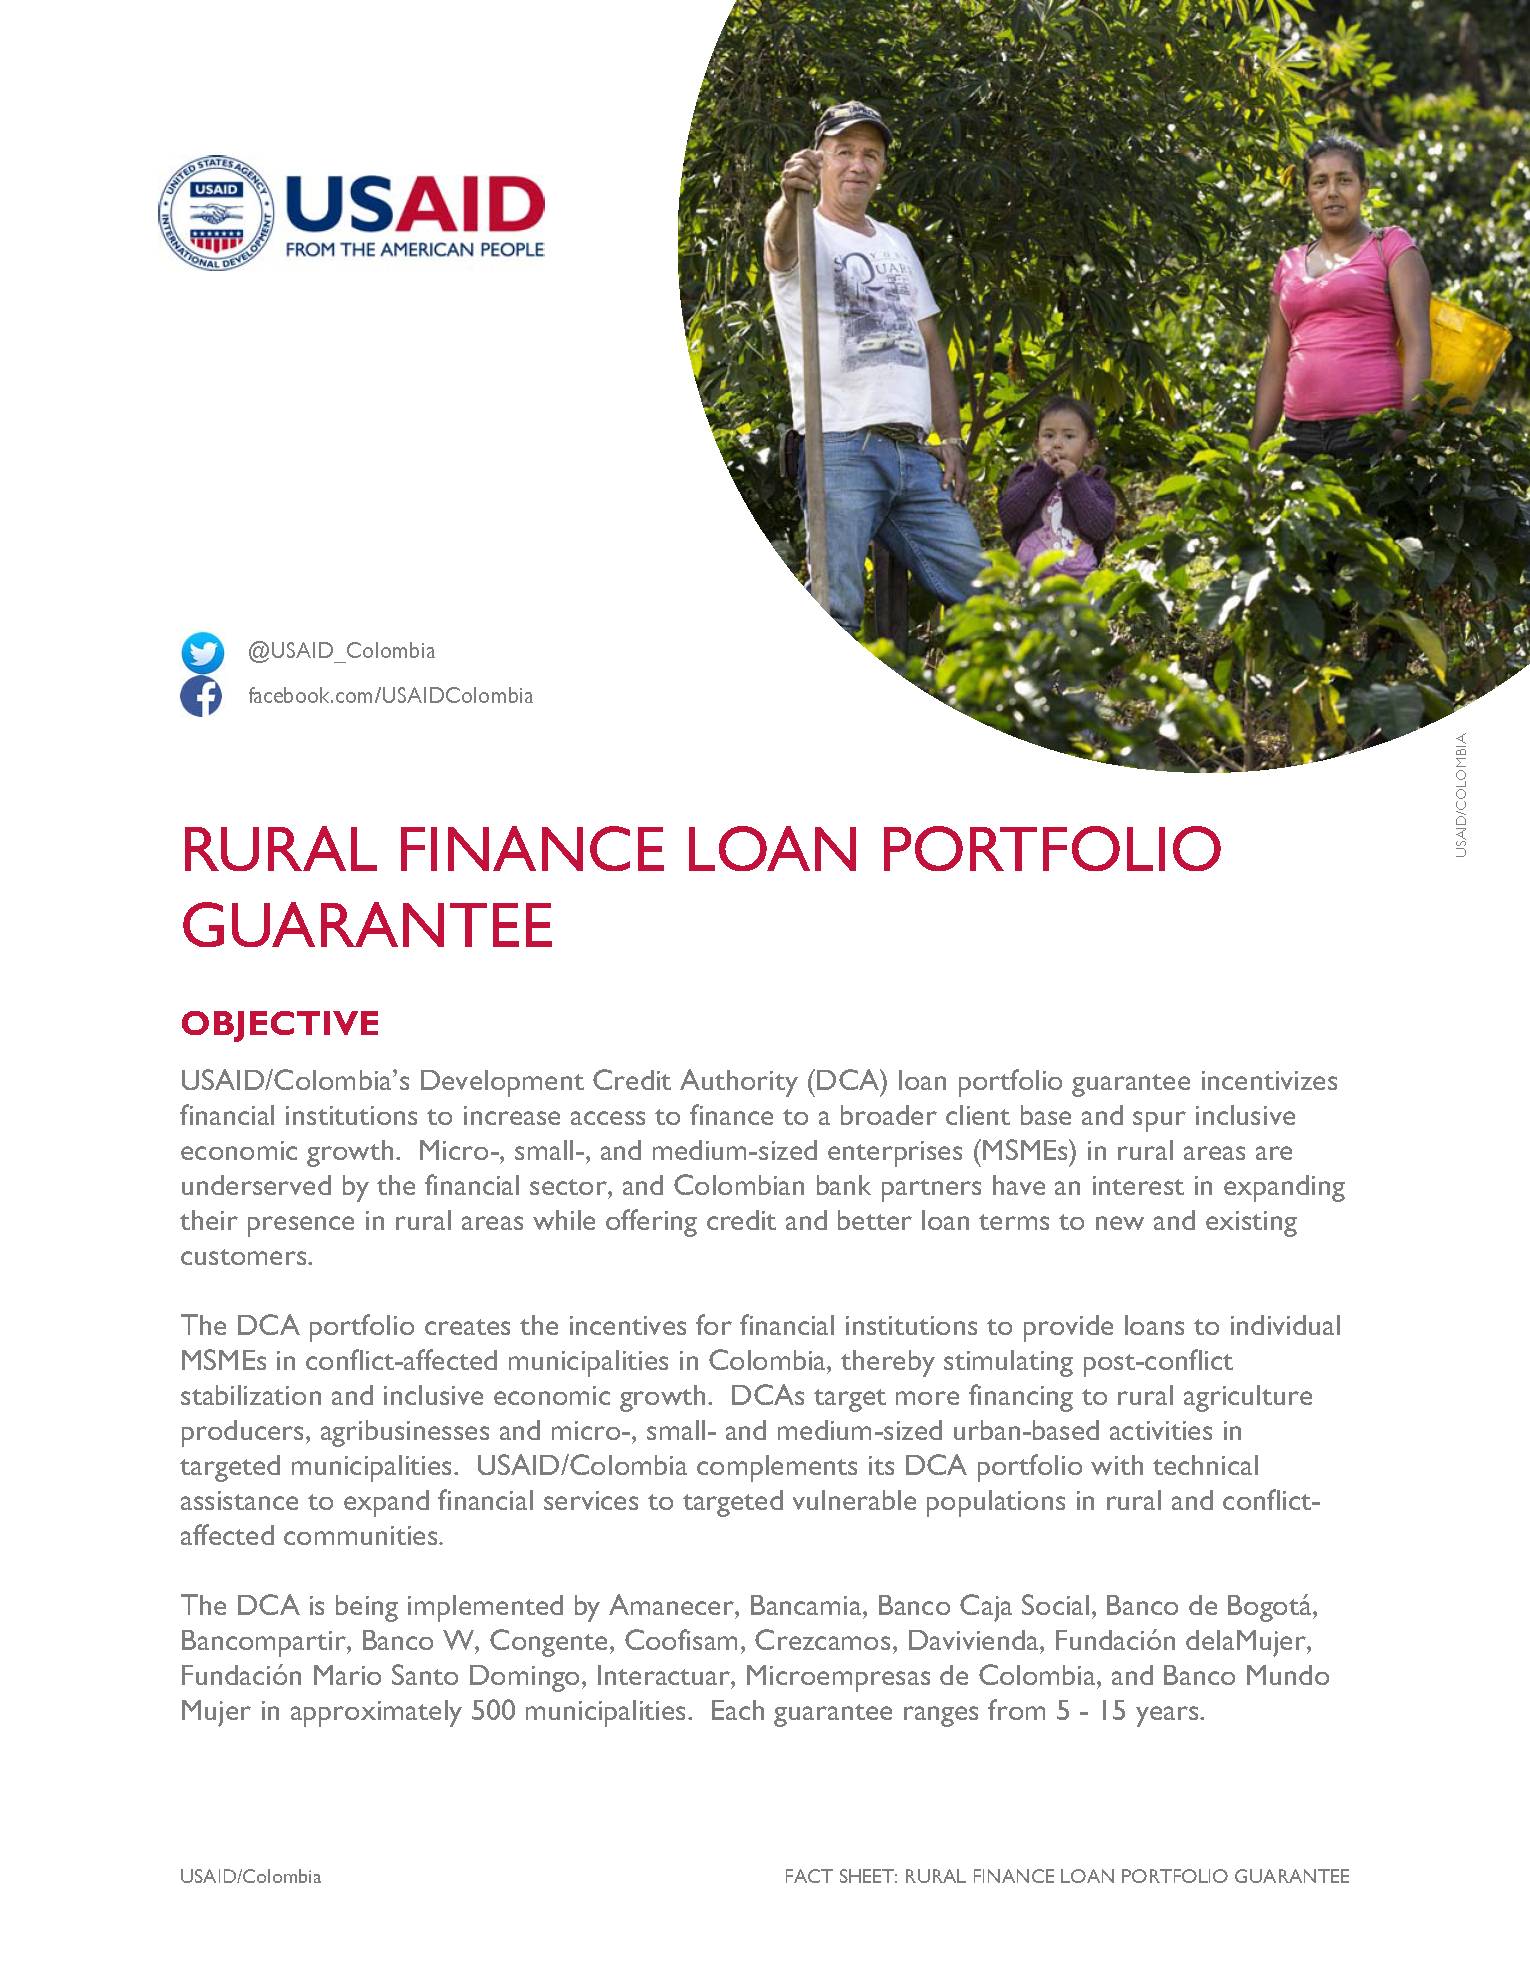 Rural Finance Loan Portfolio Guarantee Fact Sheet